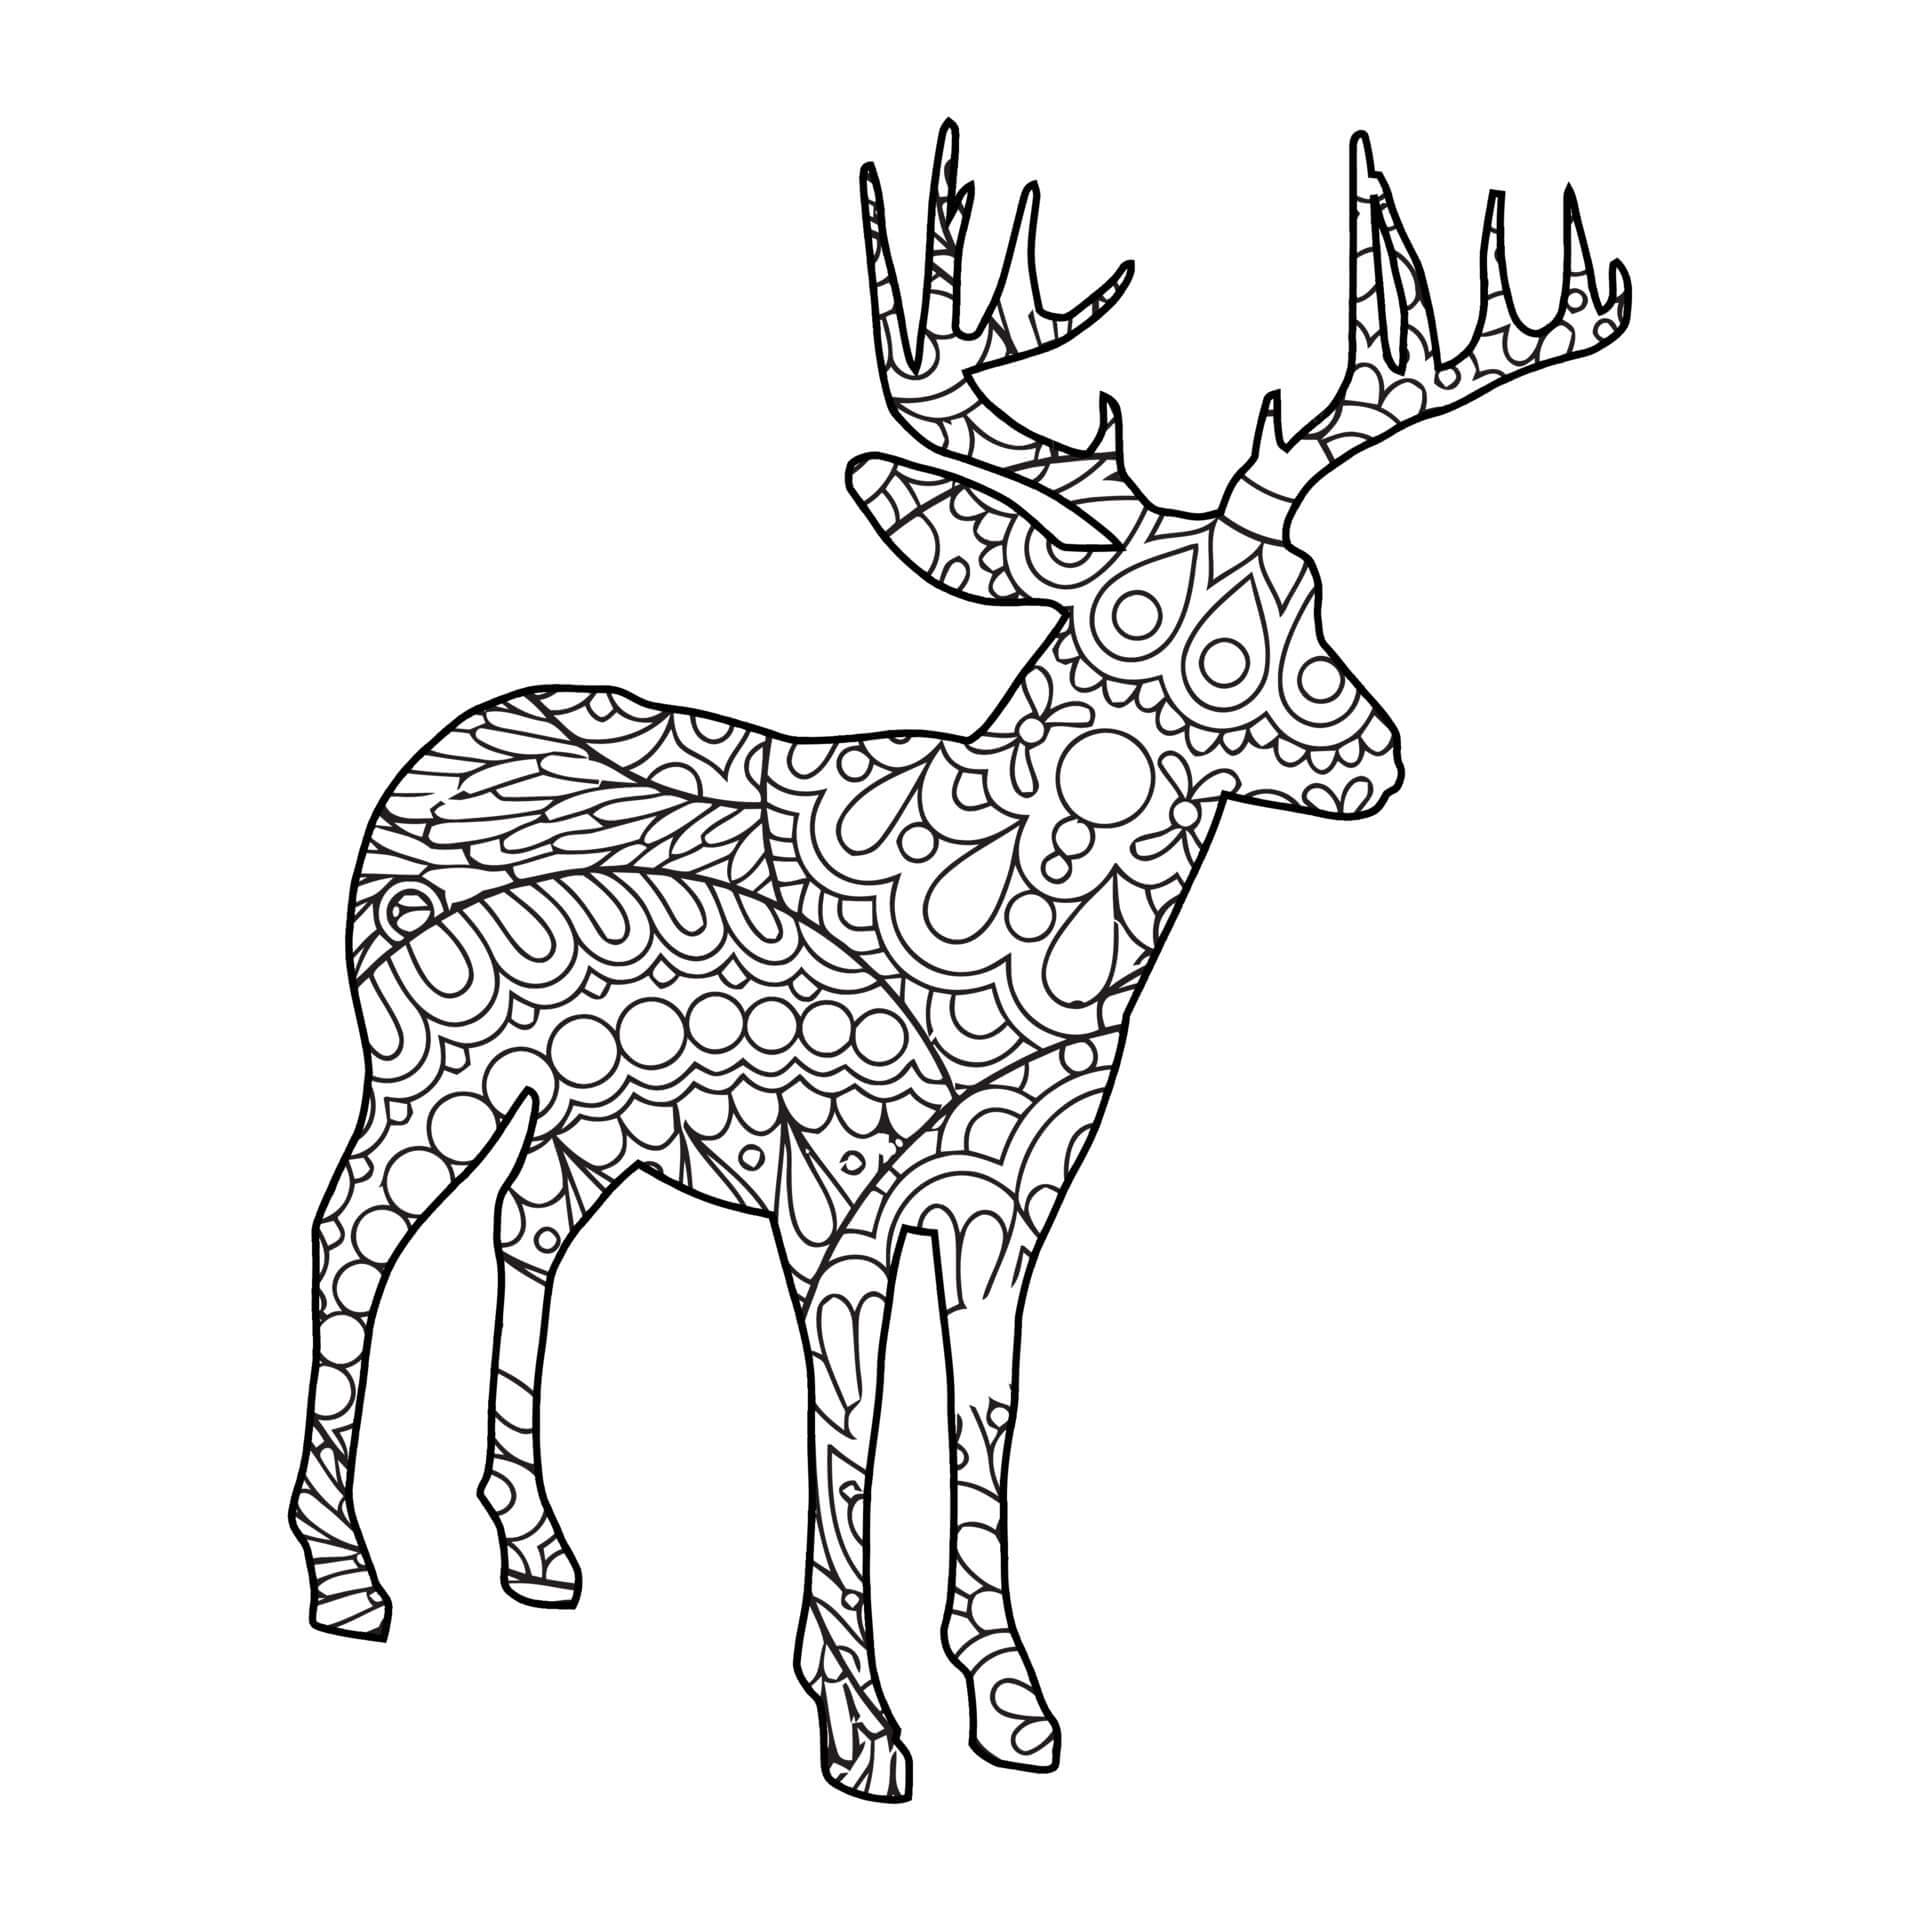 Mandala Reindeer Coloring Page - Sheet 1 Mandalas